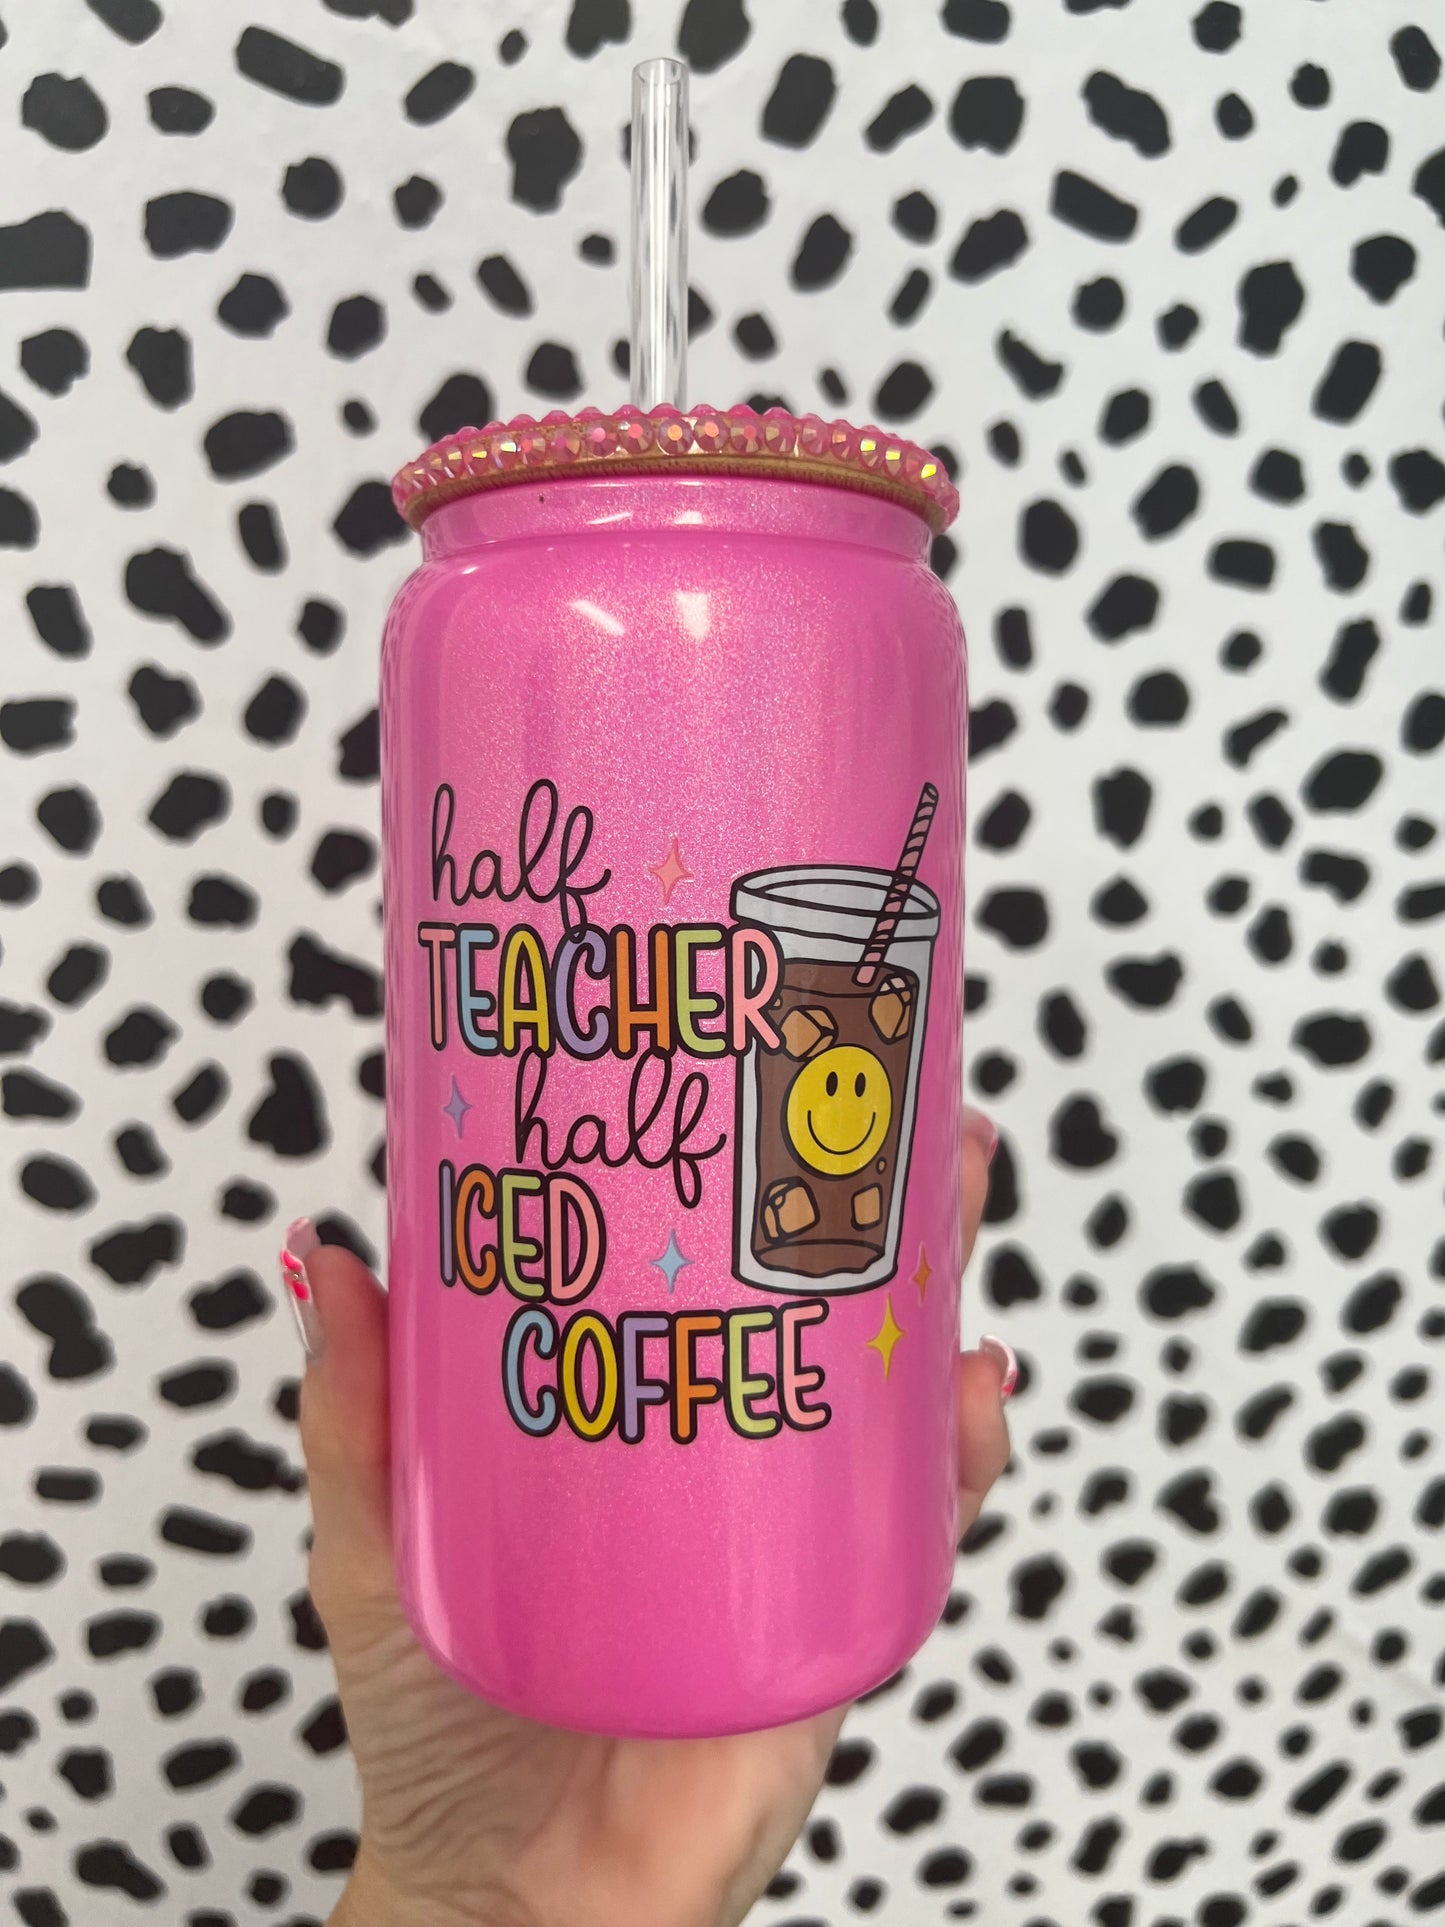 Half teacher|Half Coffee - rhinestone glitter Libby glass